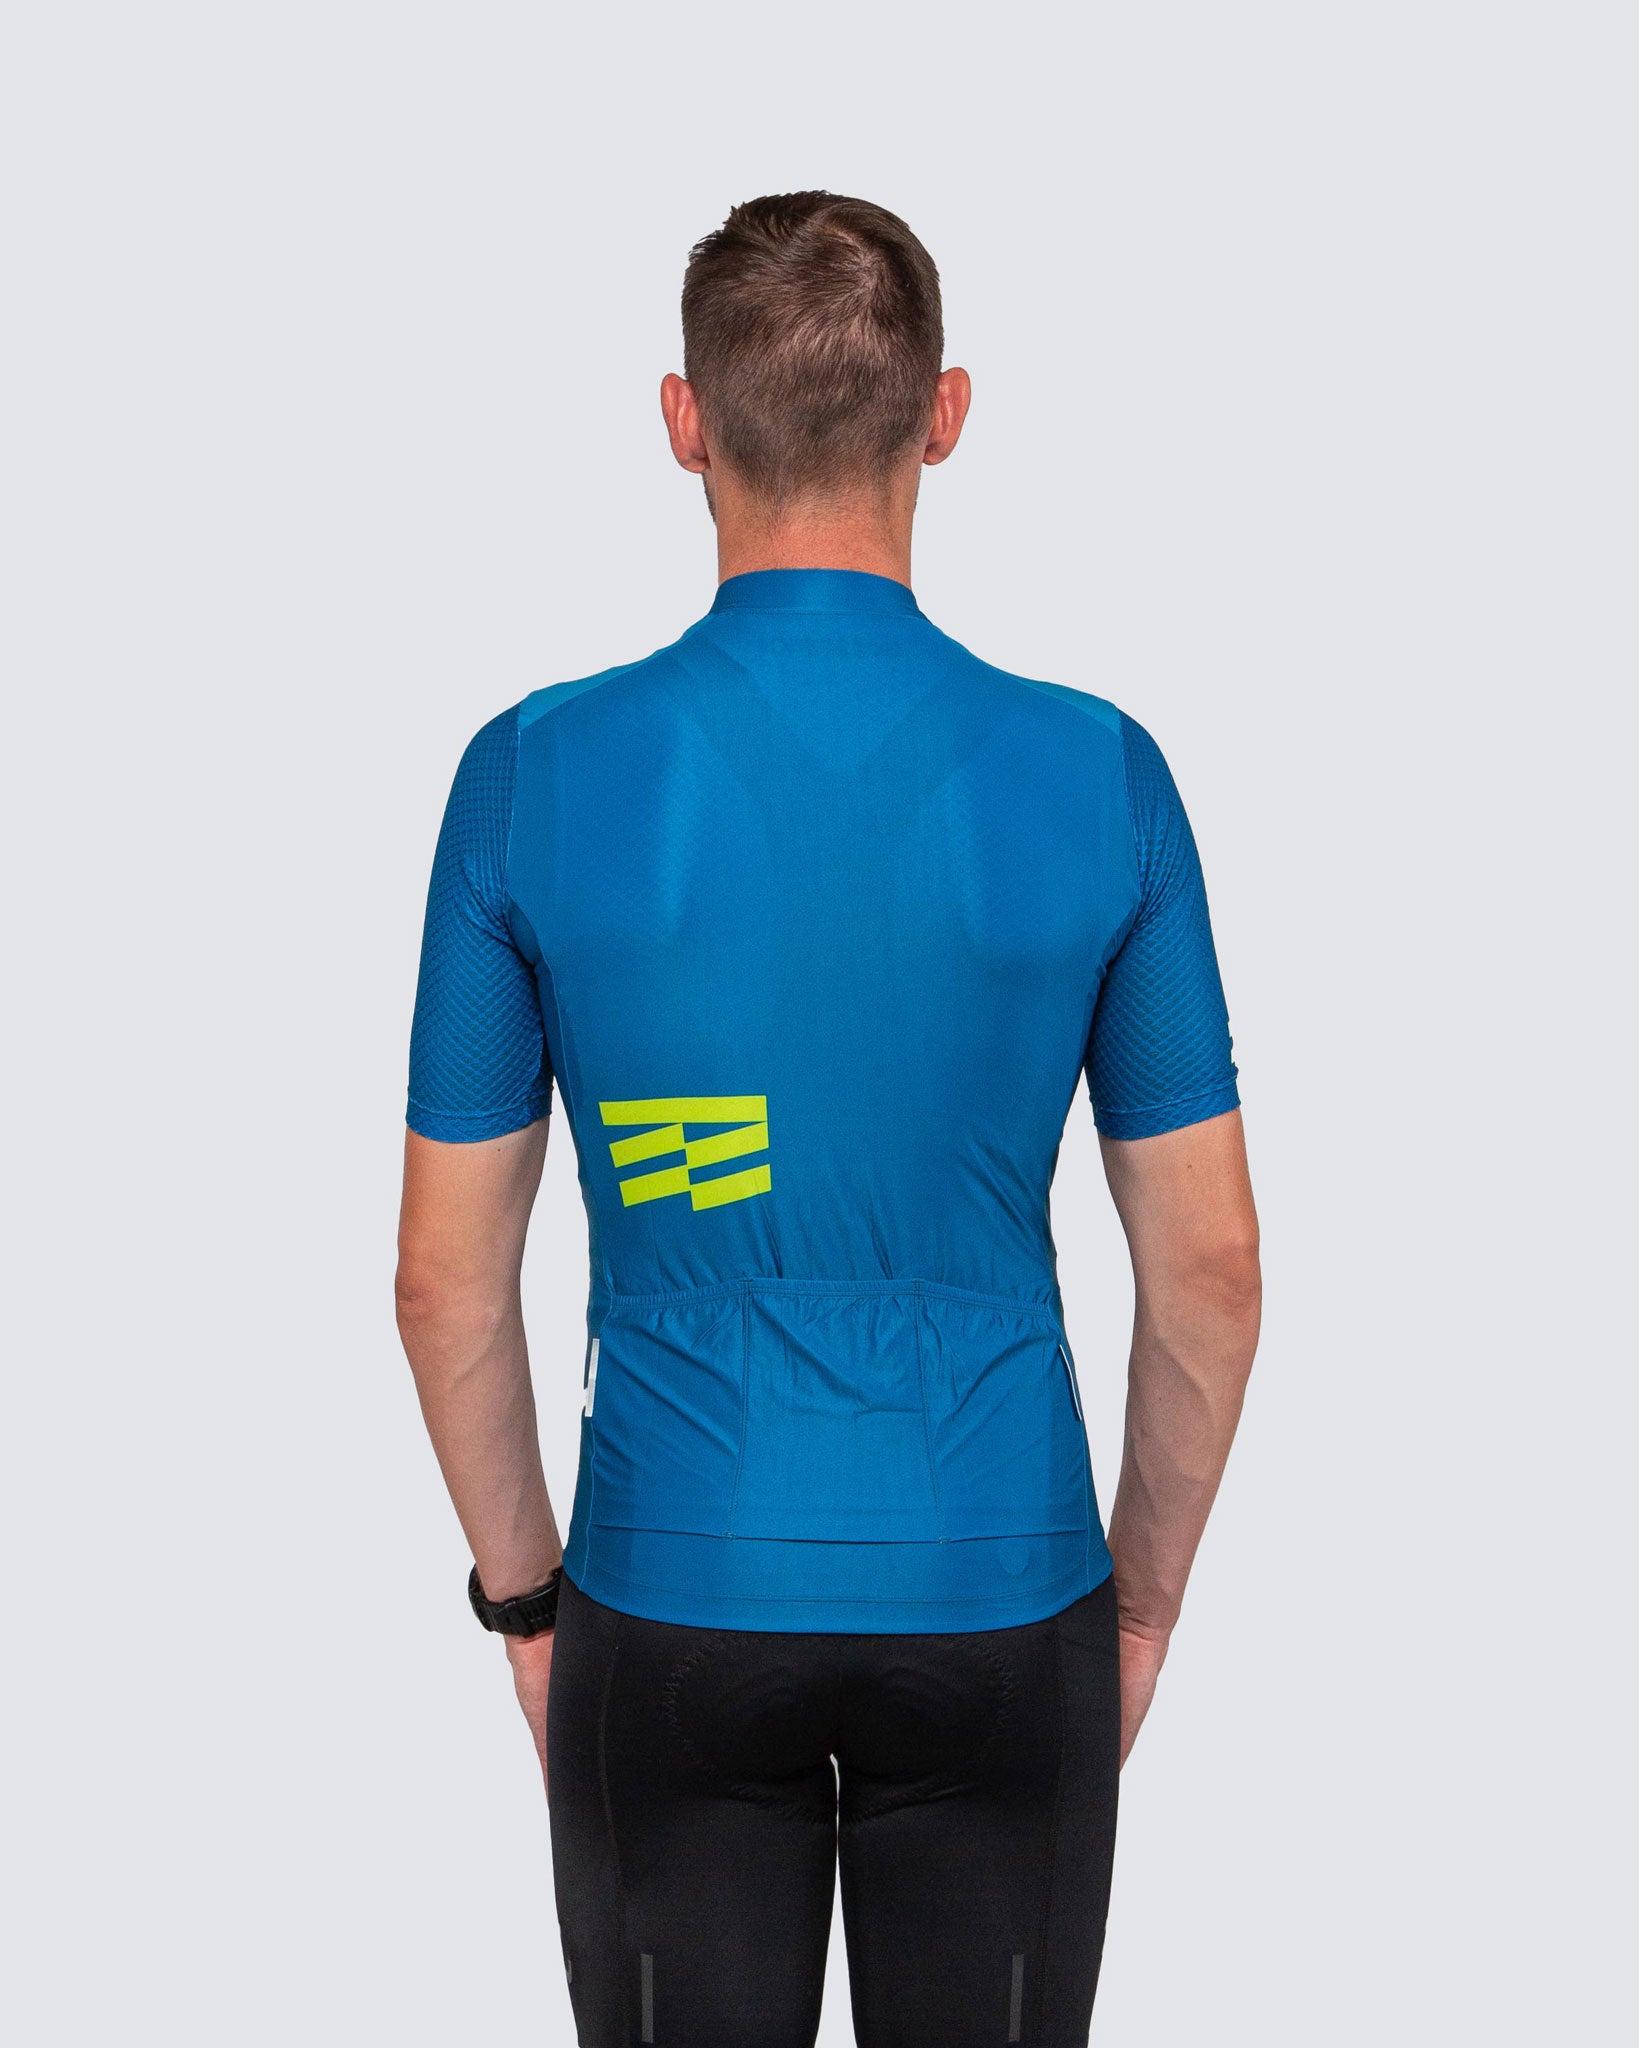 back side of man wearing blue cycling jersey